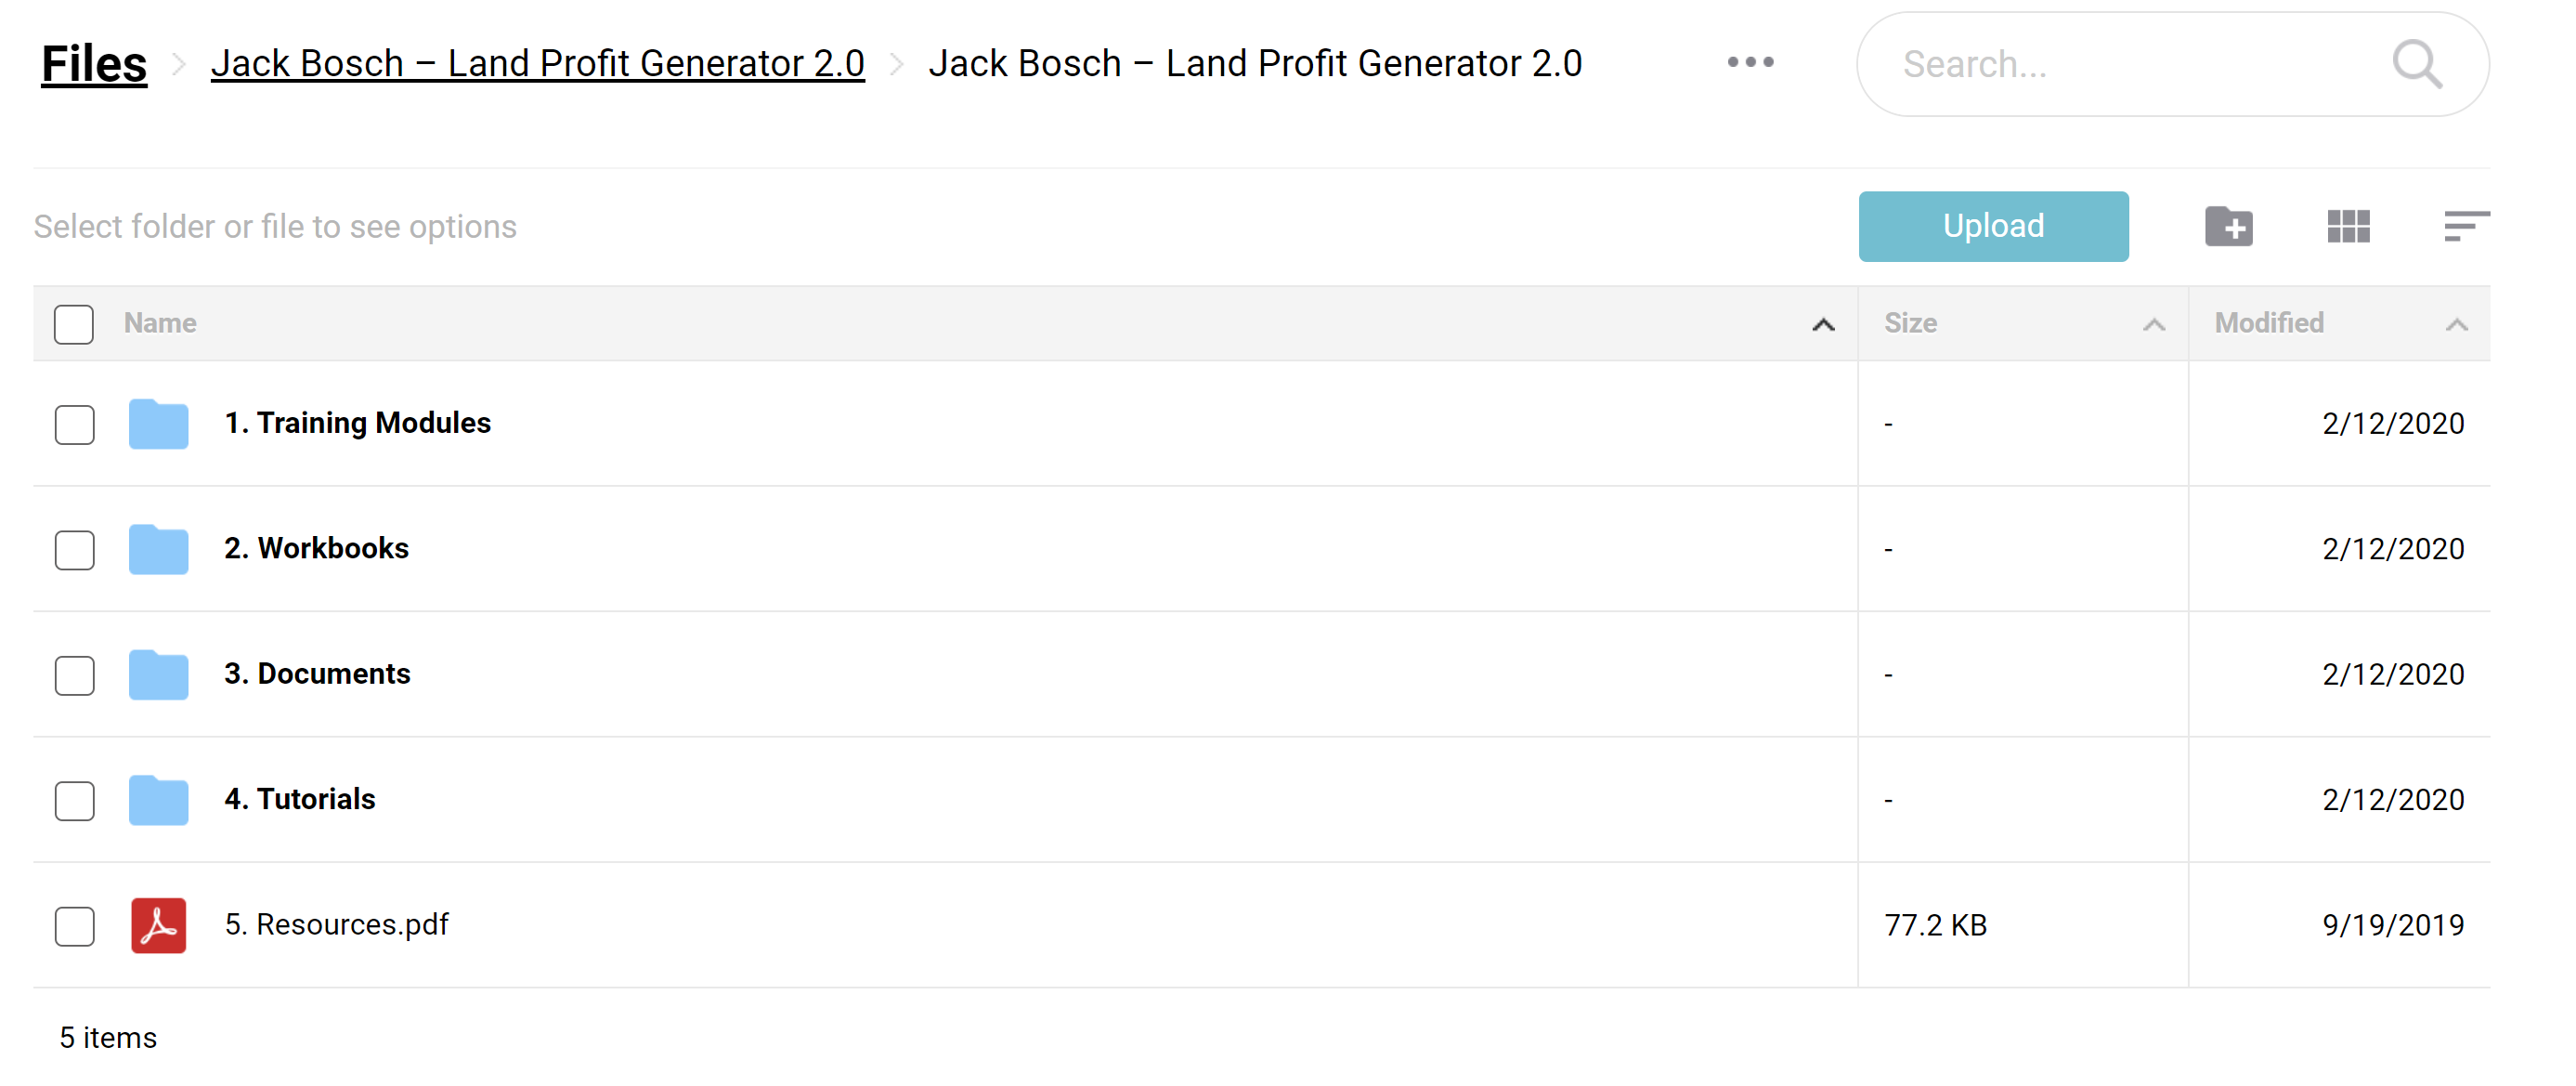 Jack Bosch Land Profit Generator 2.0